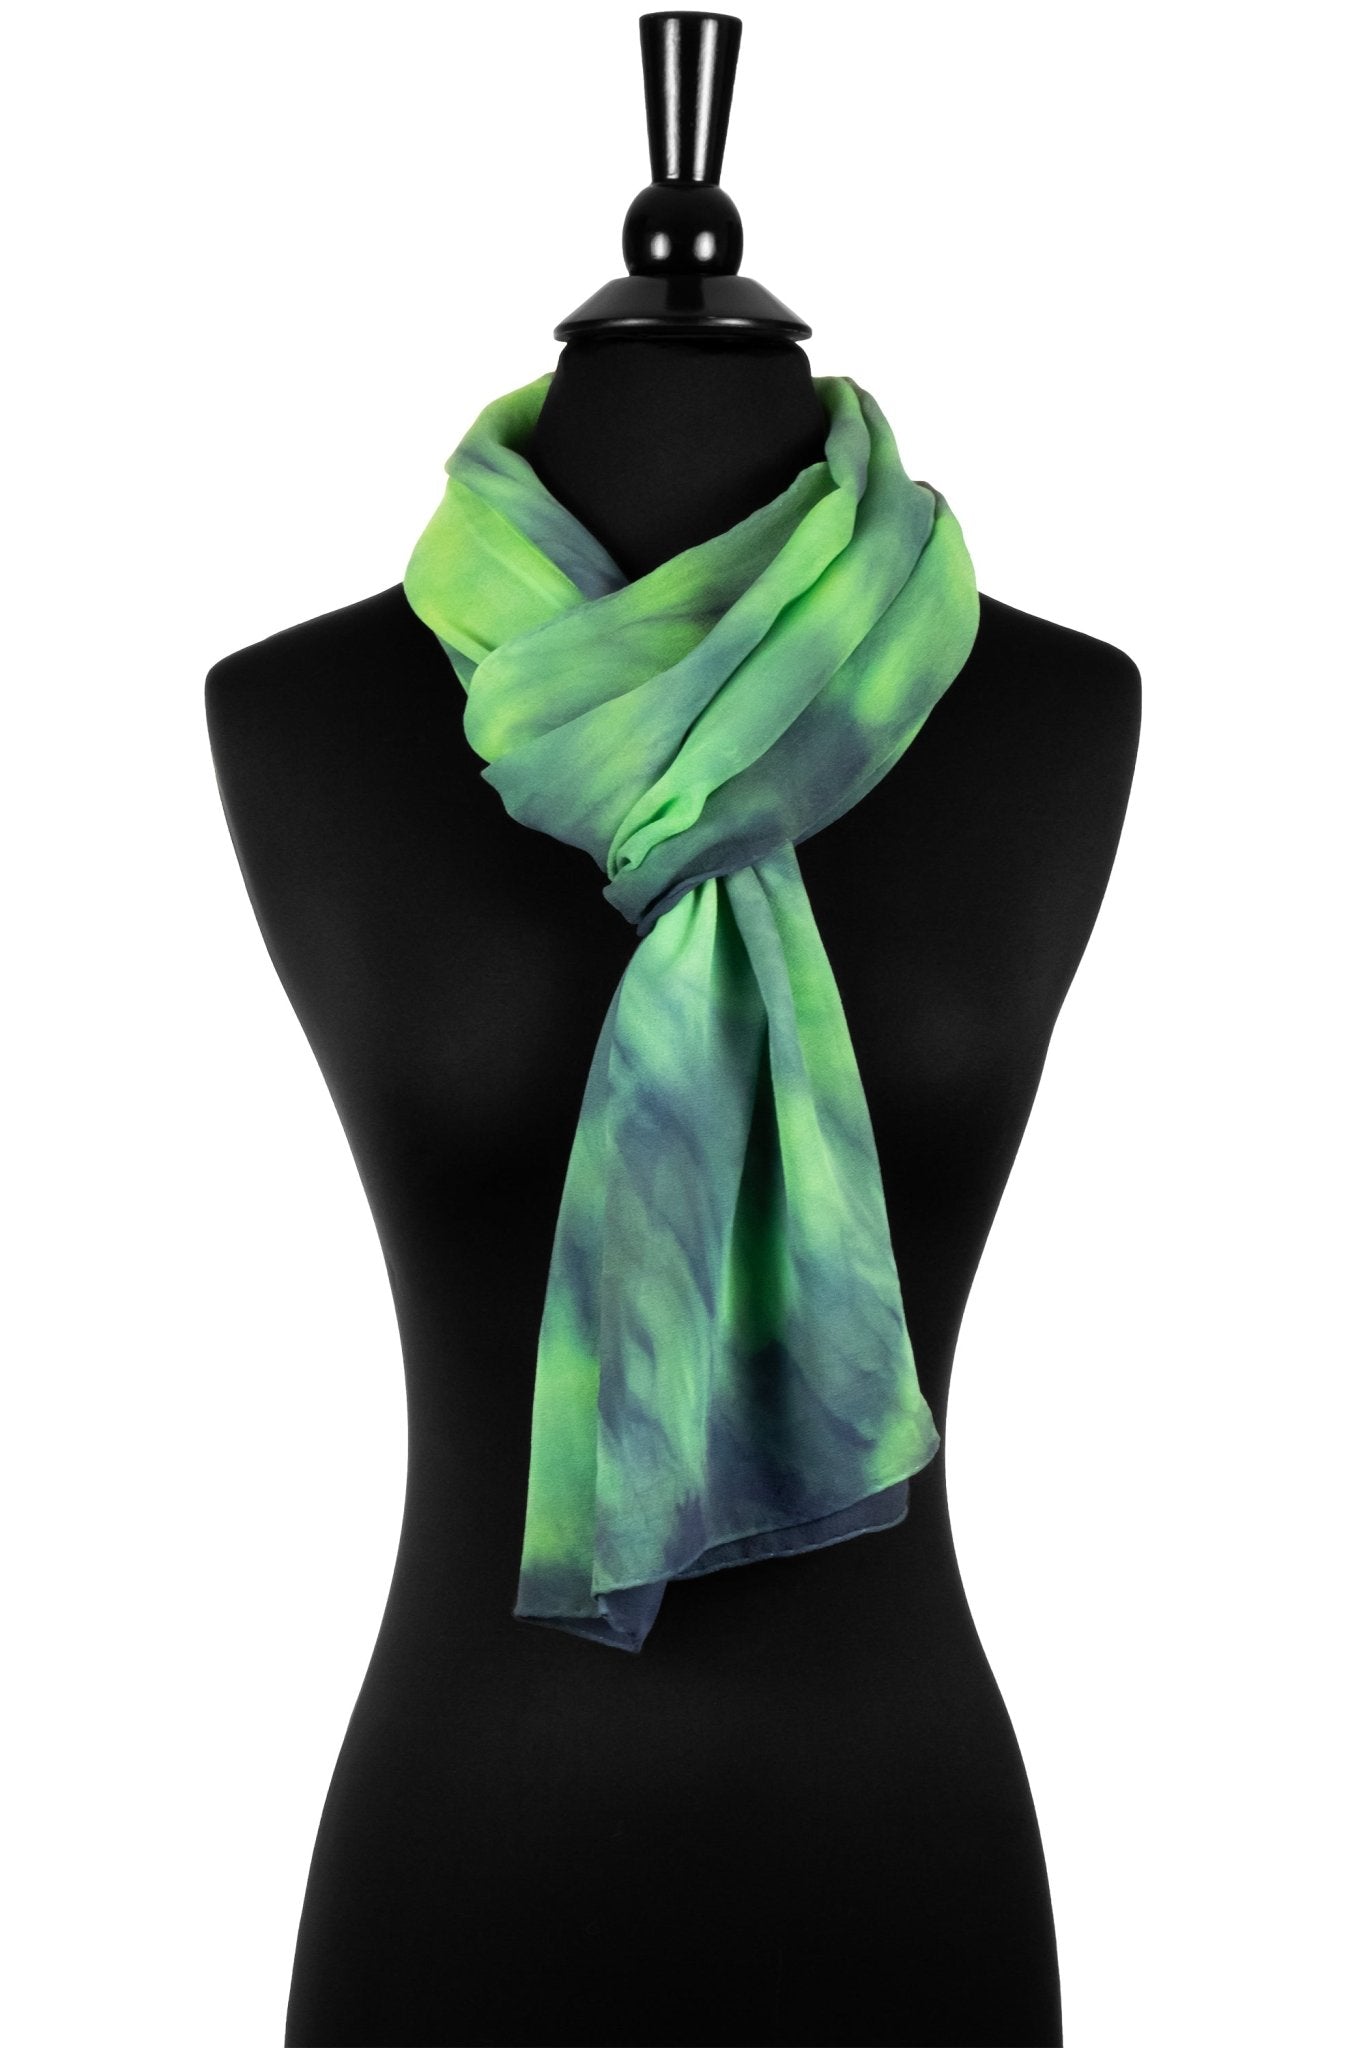 Silk 2-in-1 Drape in Green and Navy - Sherri O Designs